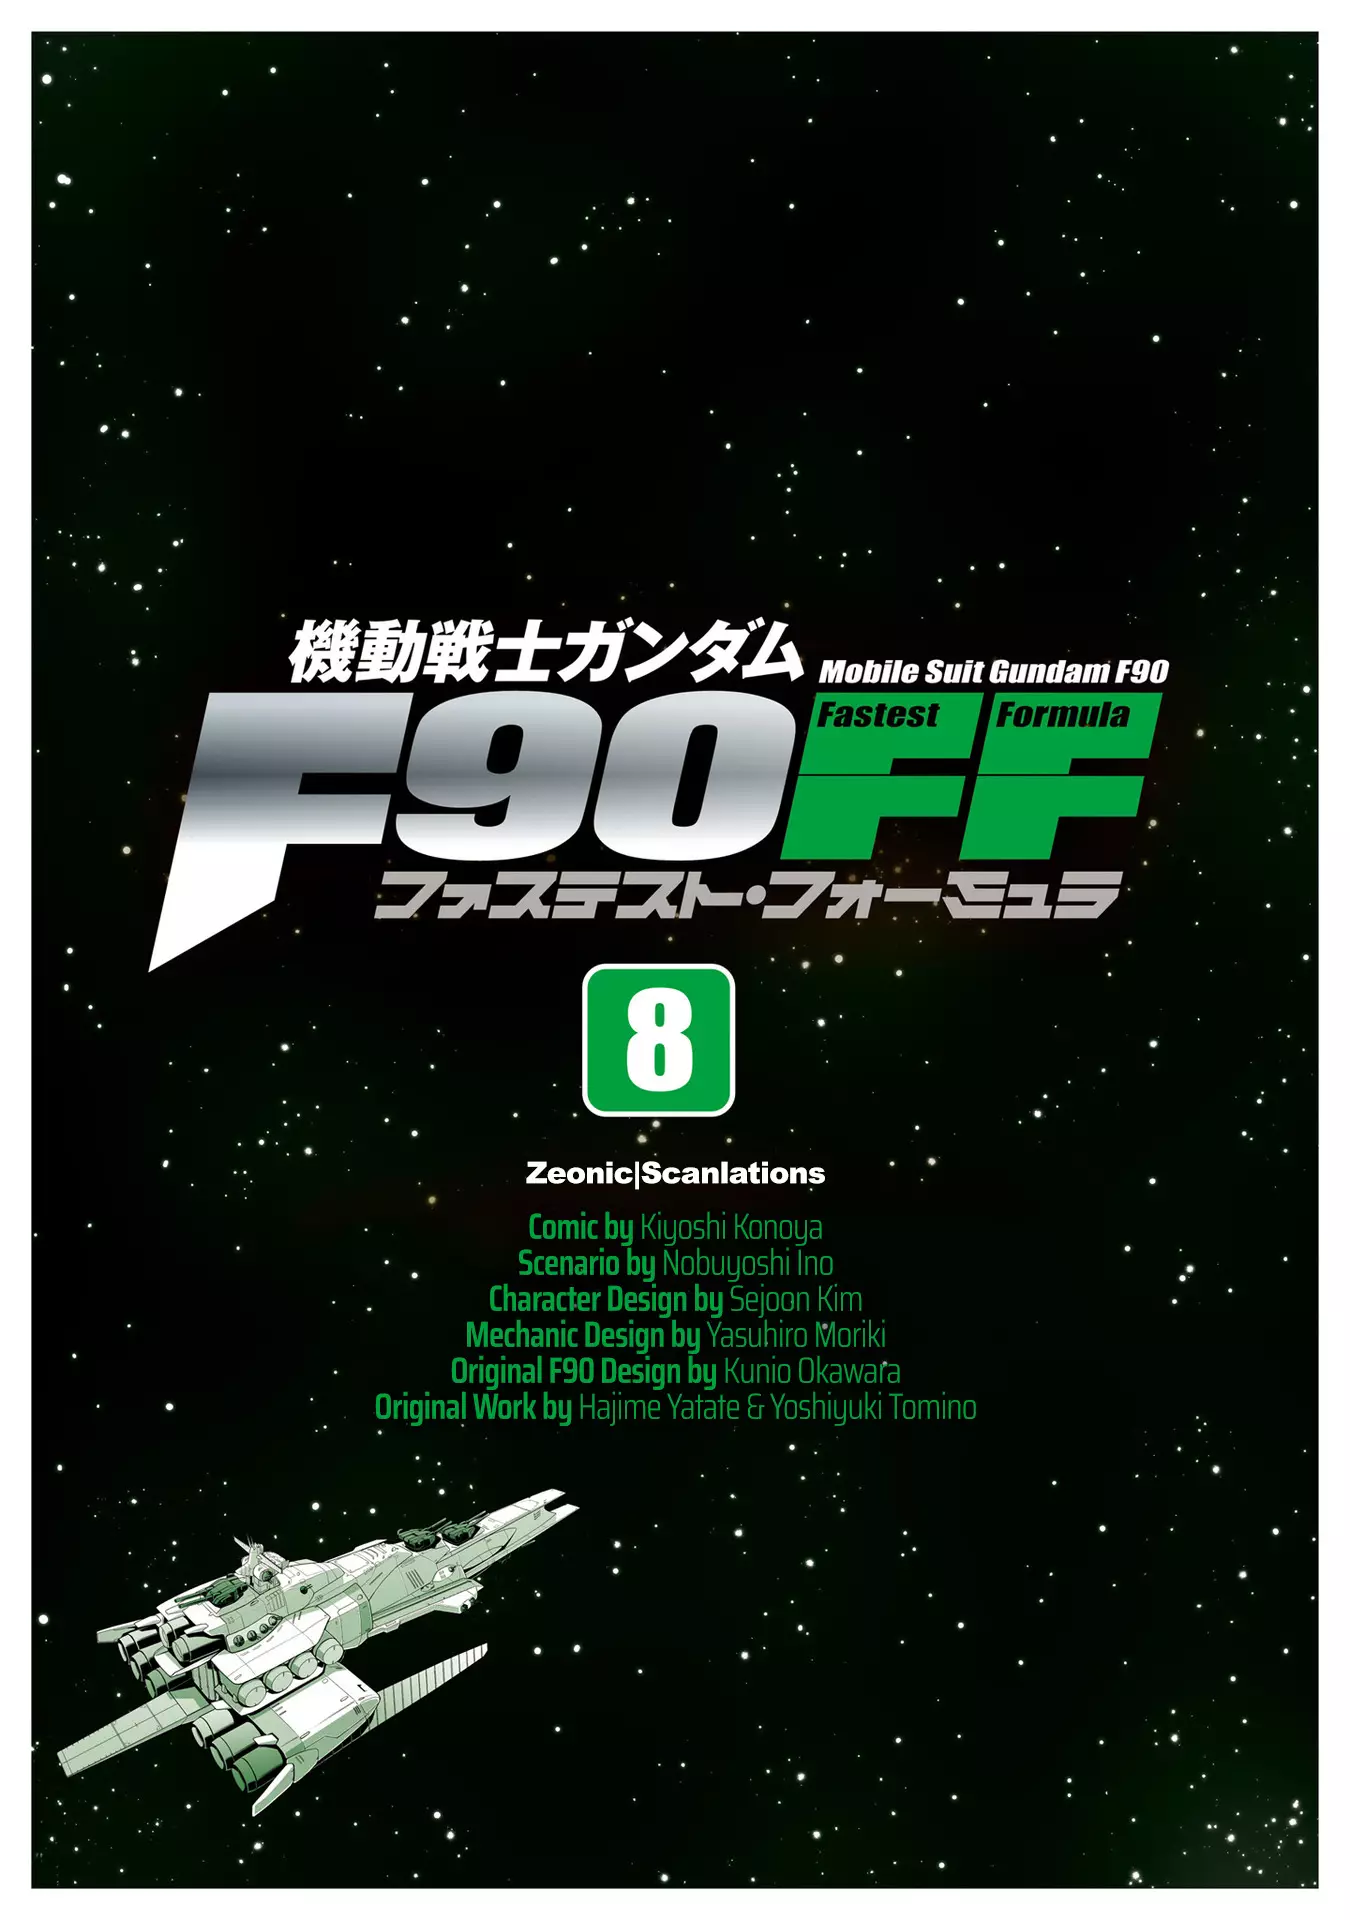 Mobile Suit Gundam F90 Ff - 29 page 2-f9b2b040